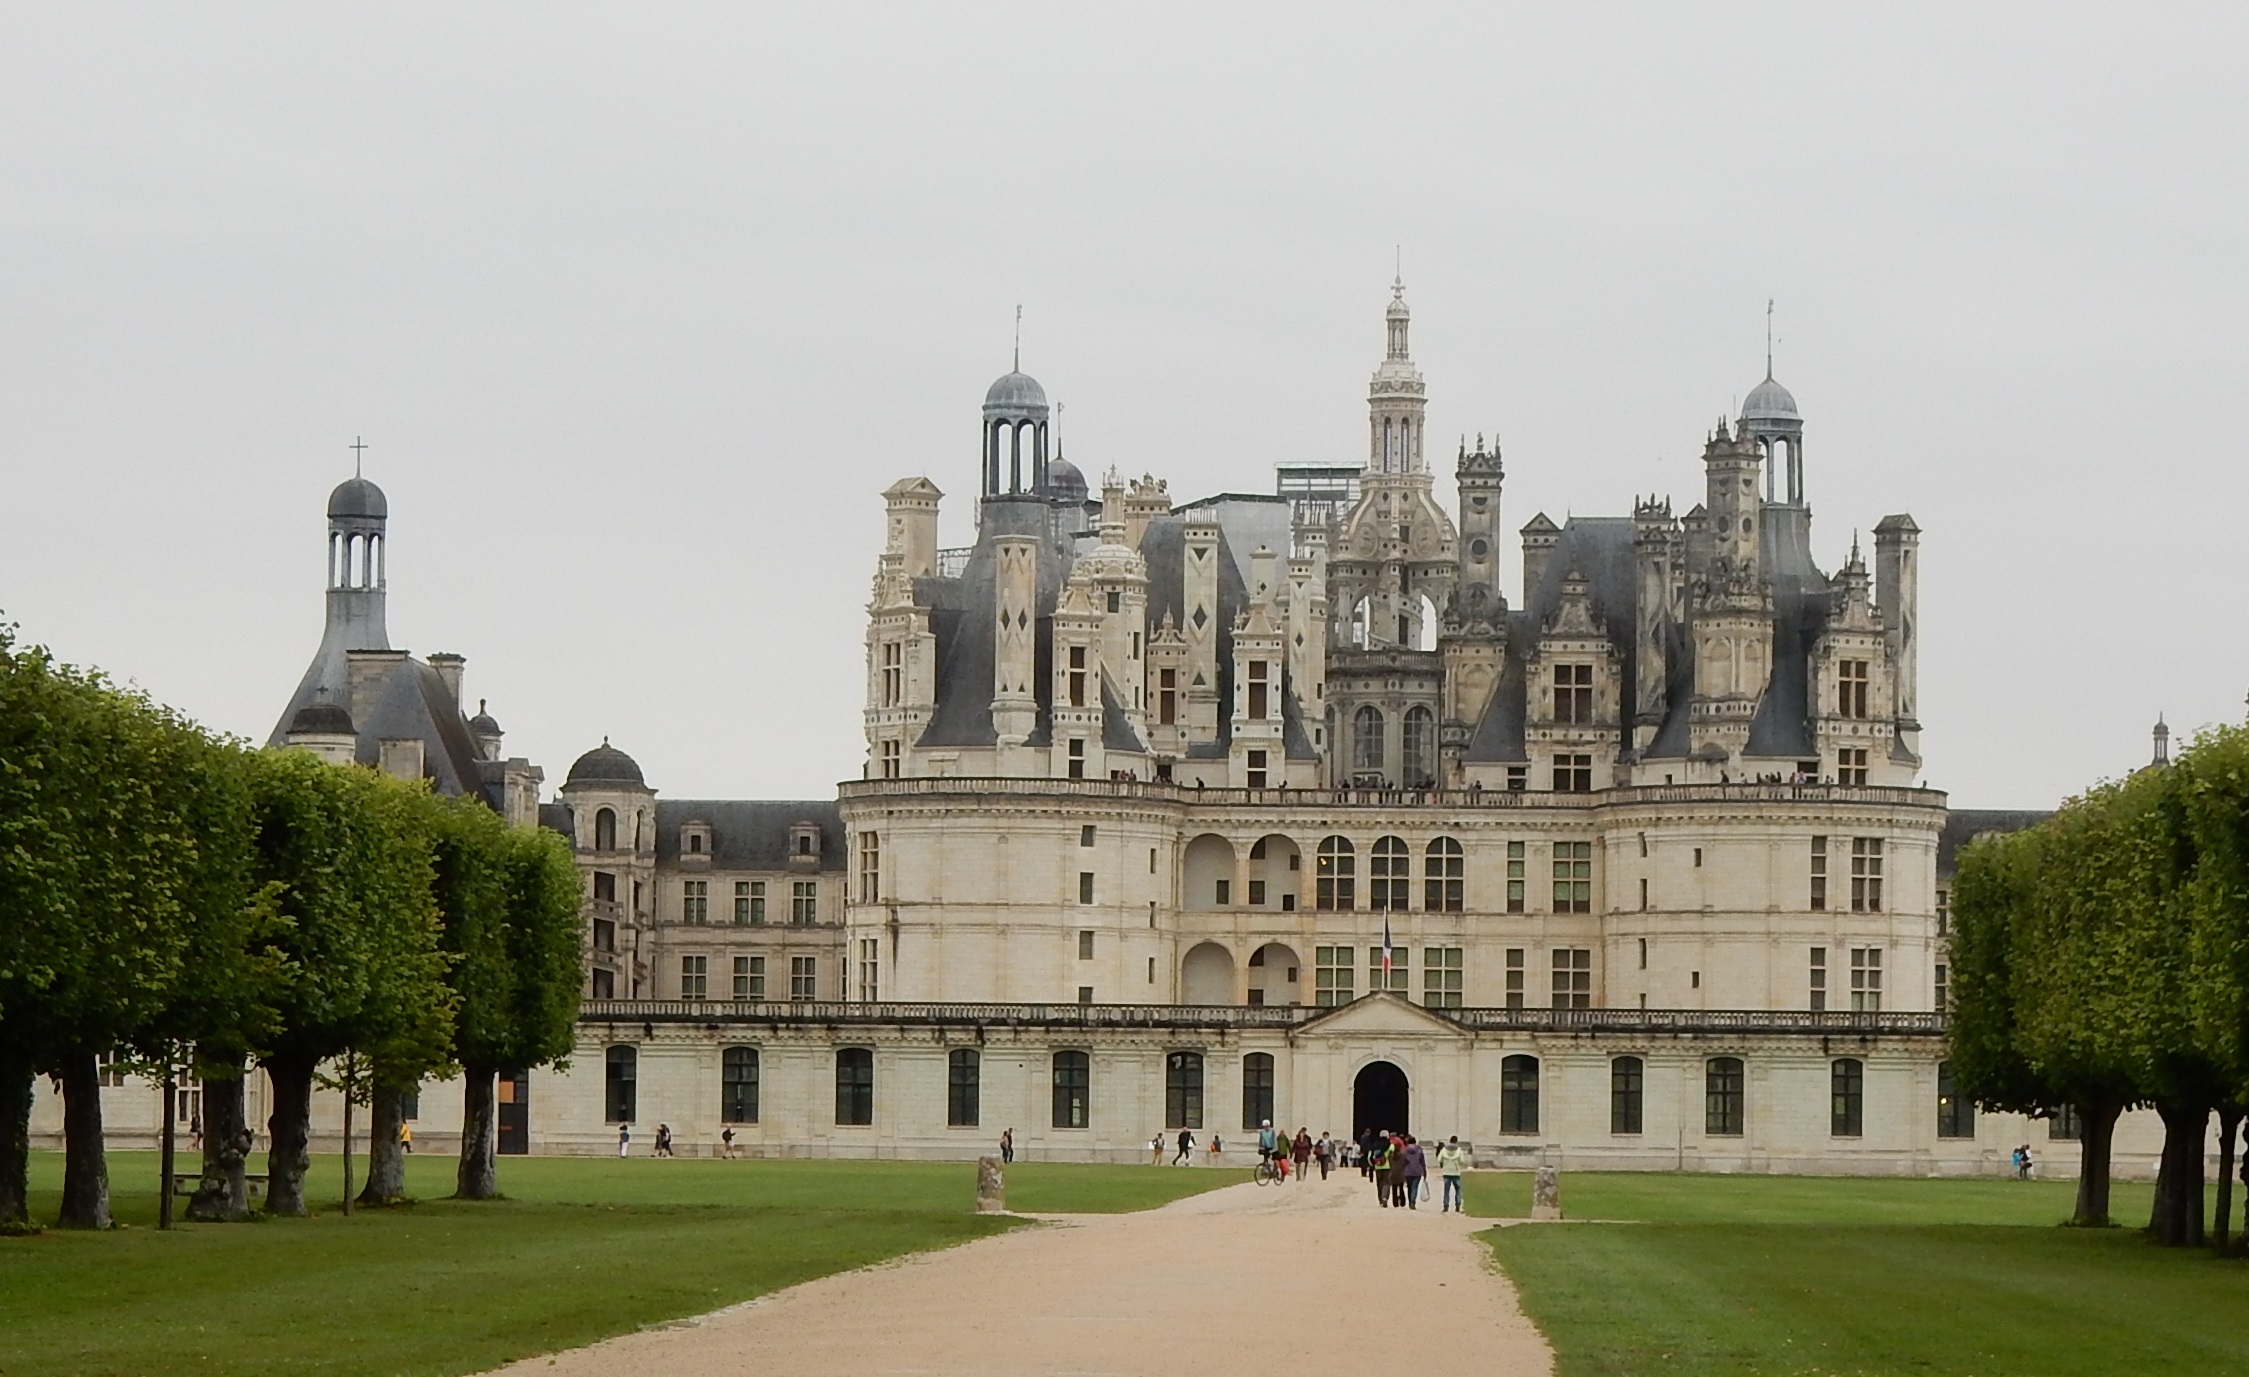 2014-07-10 13:10 Chateau de Chambord I